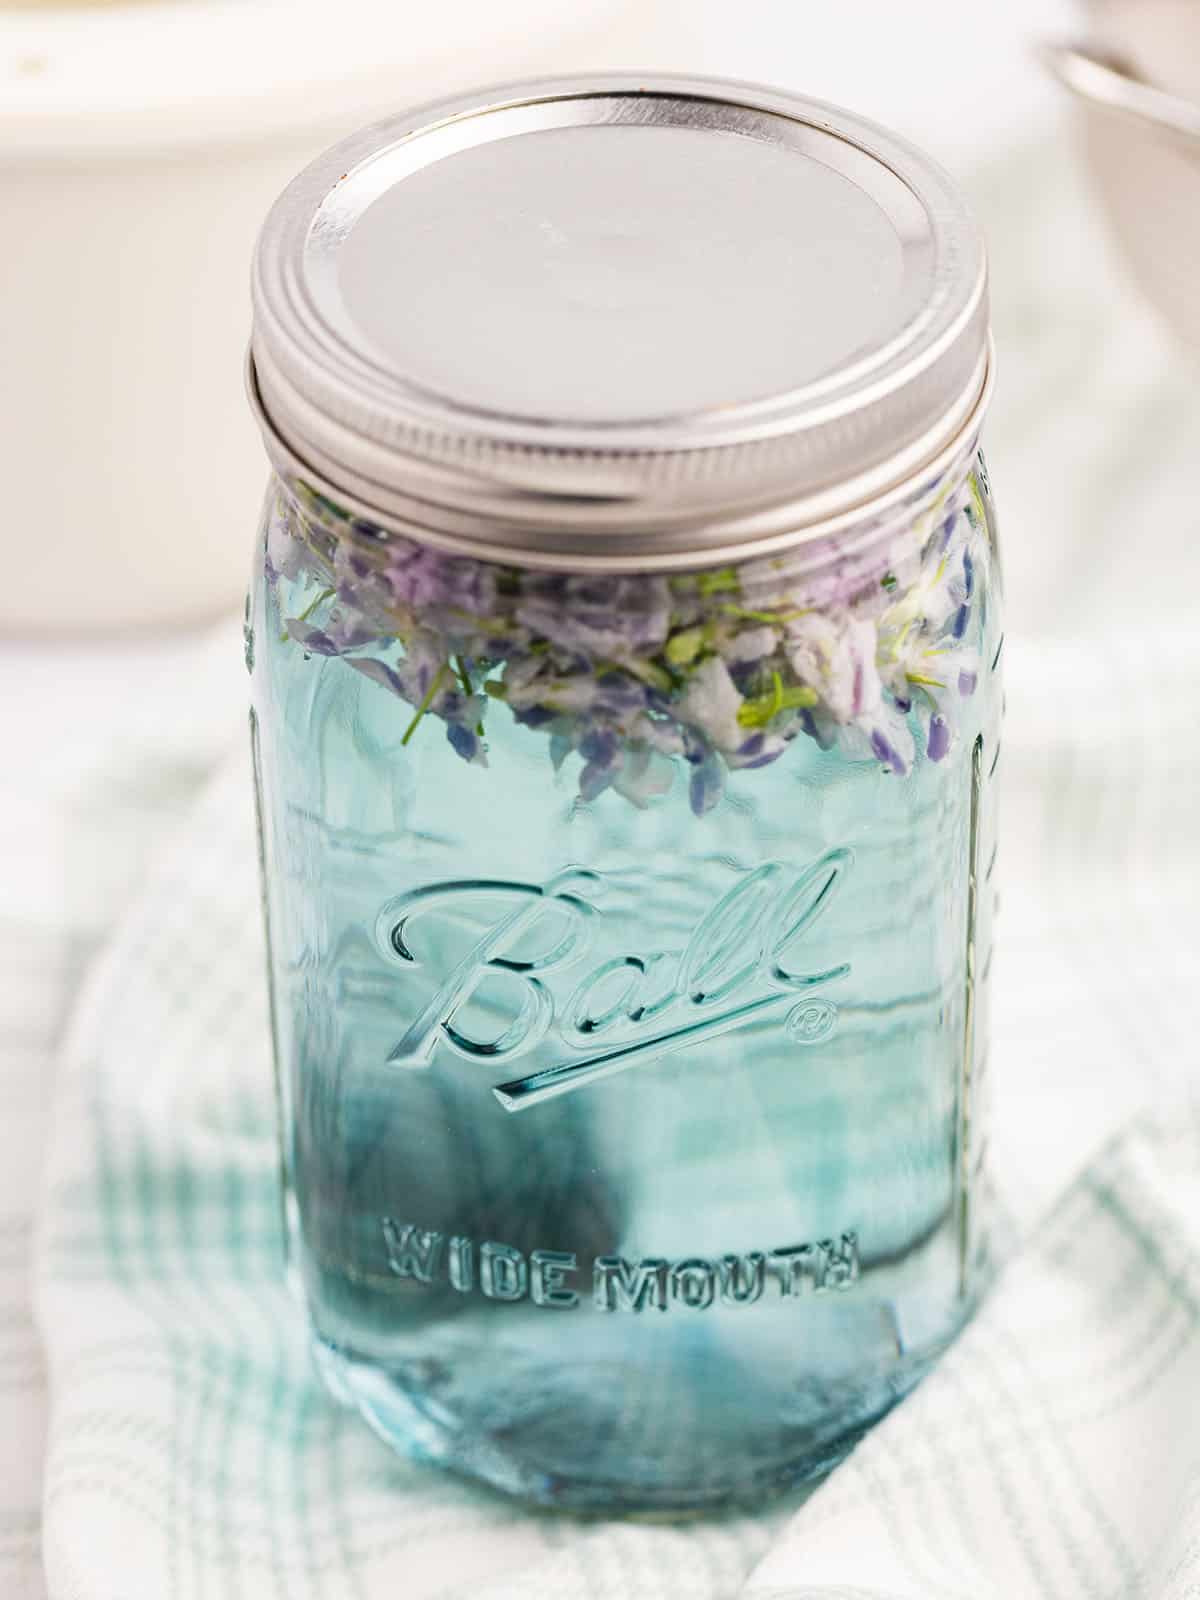 A jar of blue violet tea steeping. 